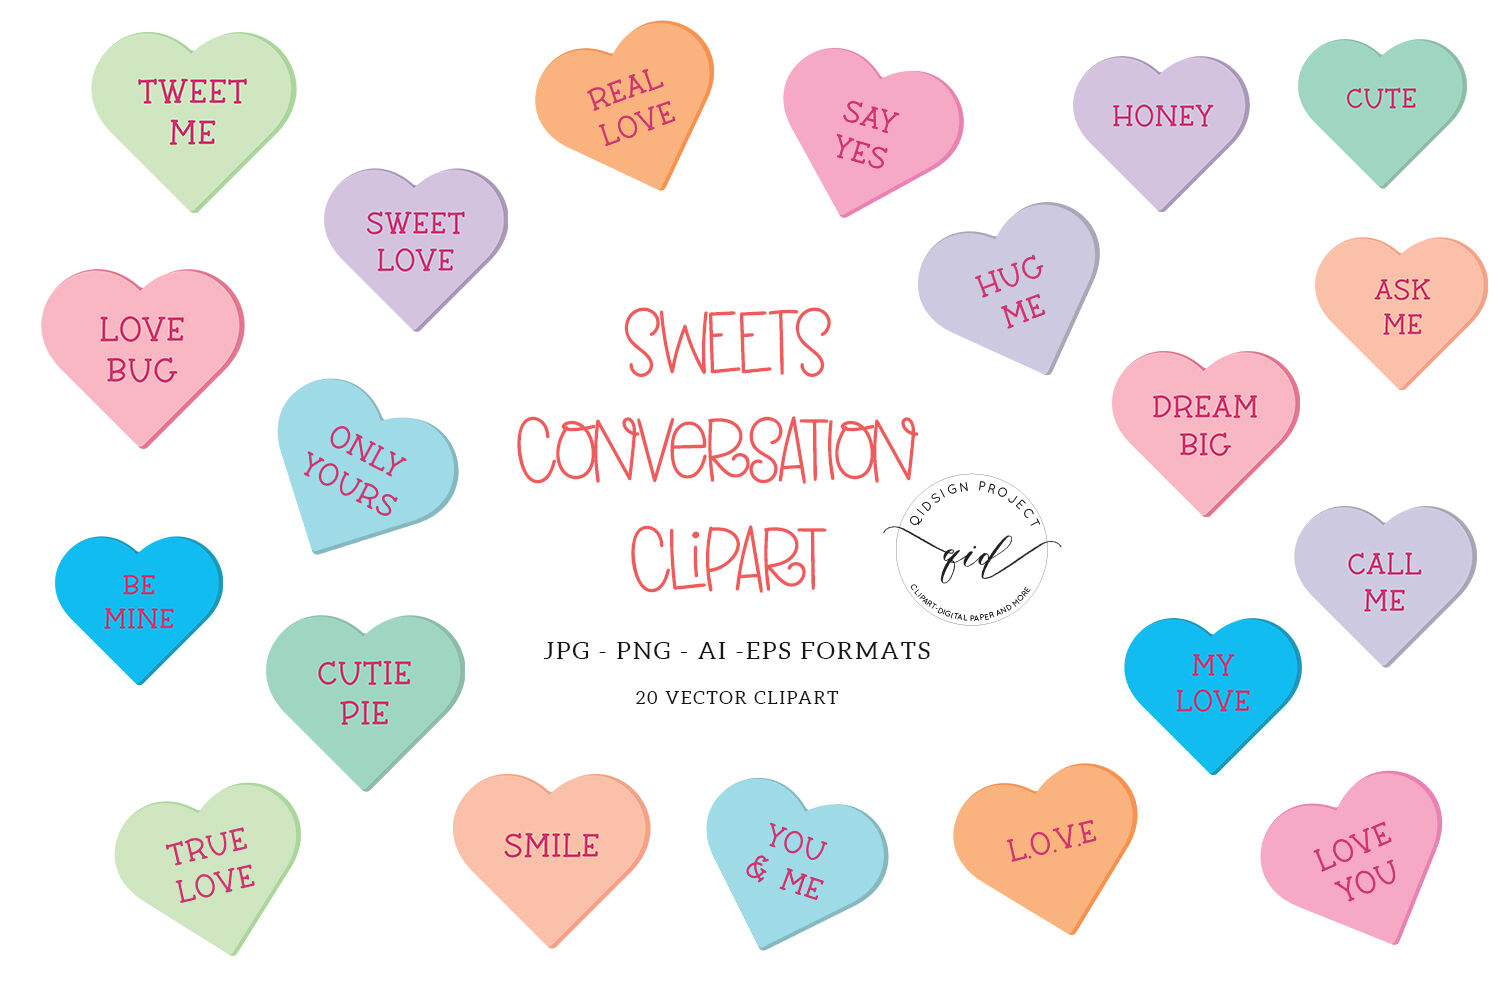 Brach's Large Conversation Hearts Candy: 16-Ounce Bag